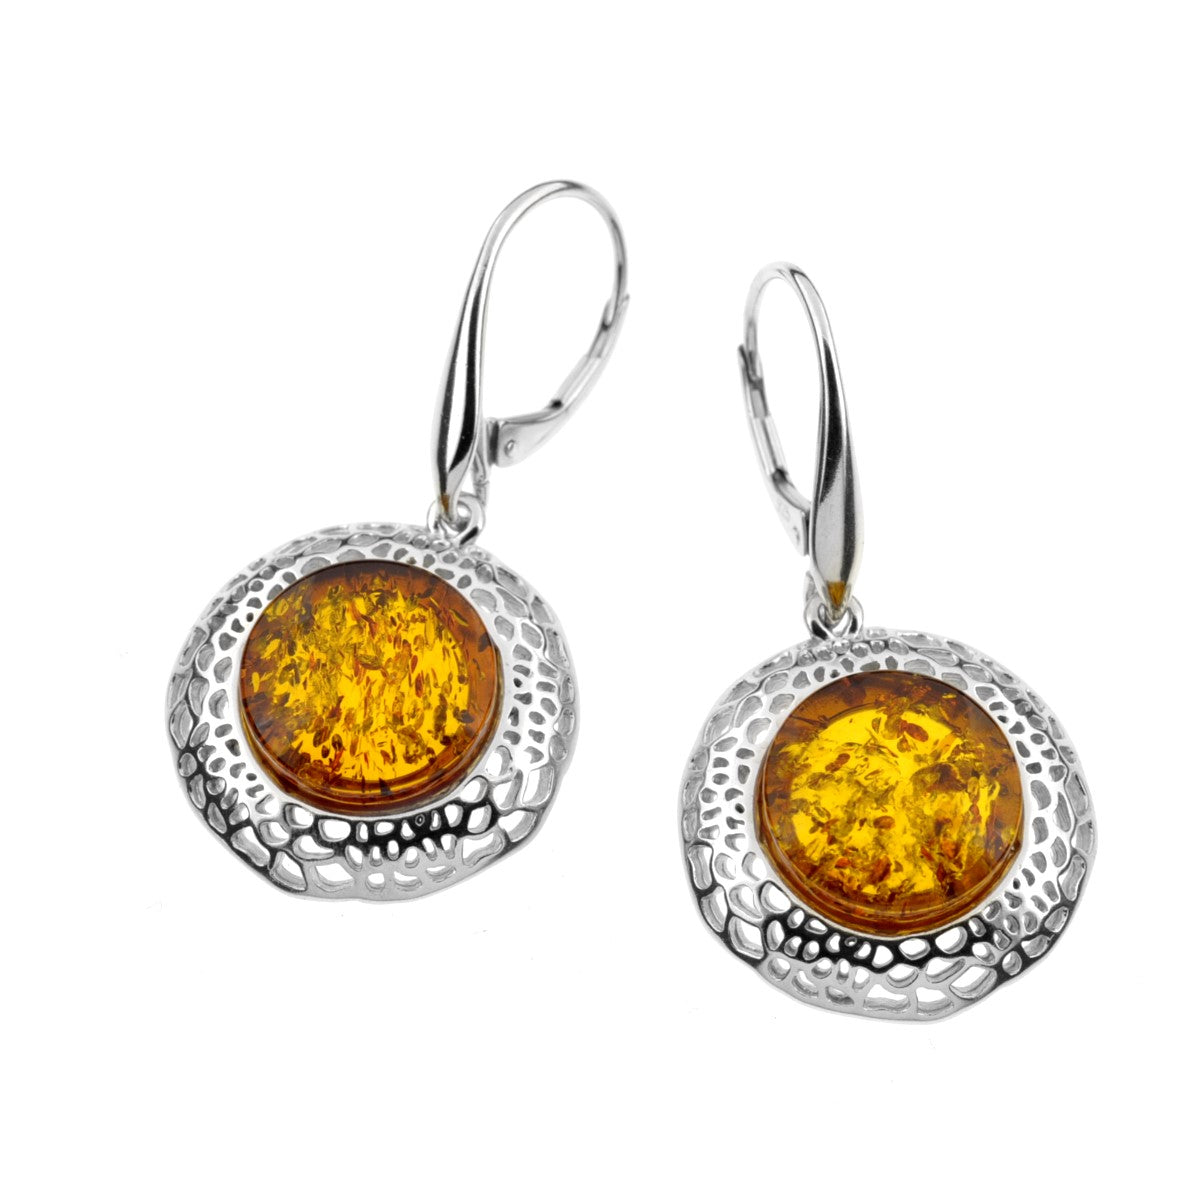 Round Cognac Amber earrings - Amber House 